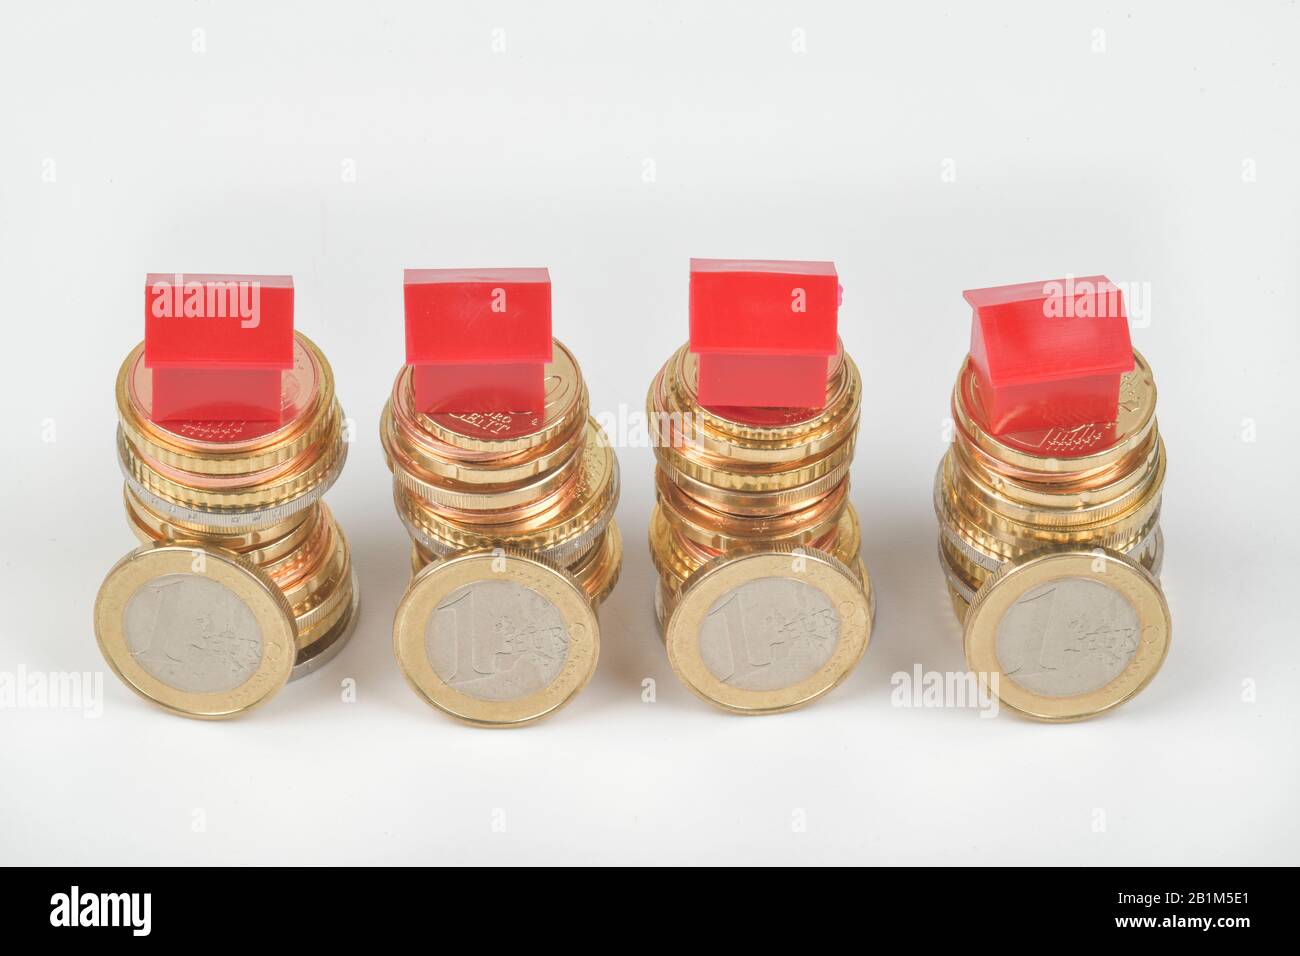 Geld, Euros, Euromünzen, Miniaturhäuser, Symbolfoto Immobilienkauf, Studioaufnahme Stock Photo